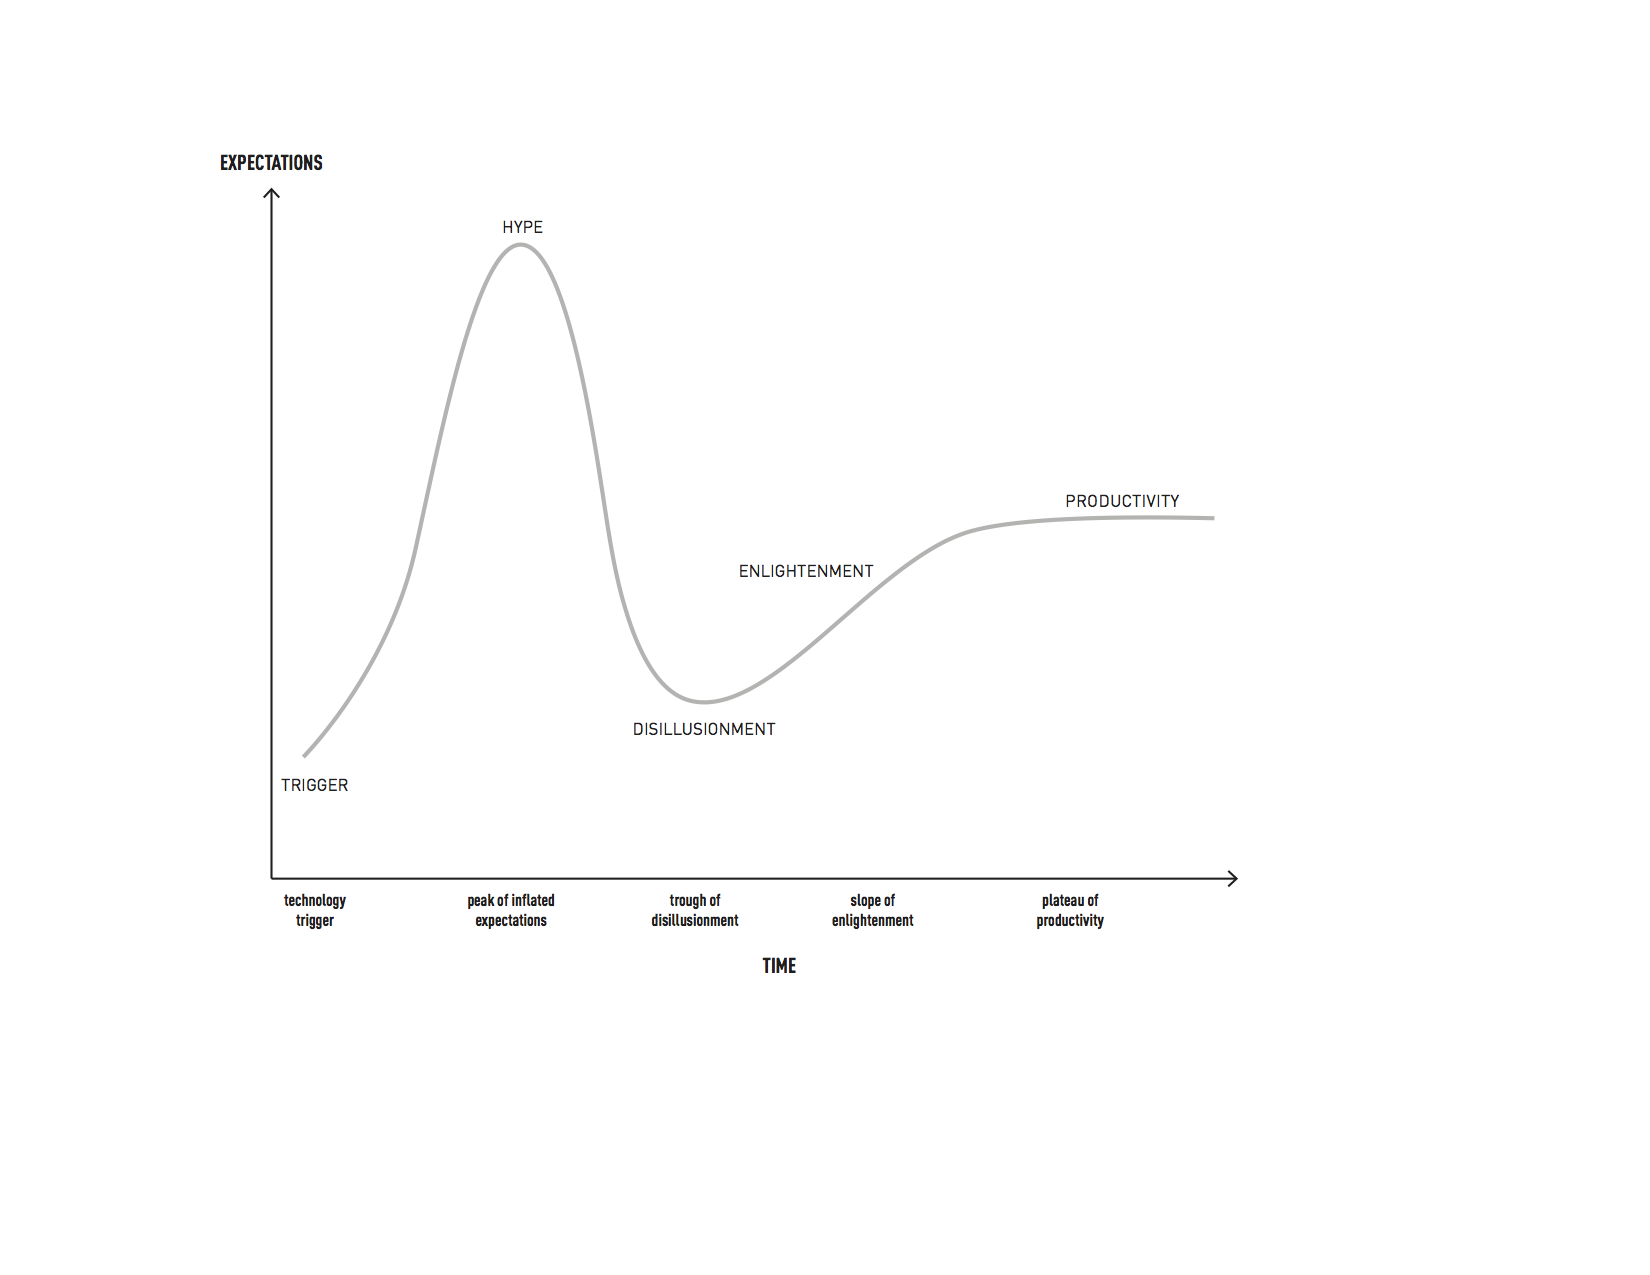 Gartner Hype Curve, http://tbdcatalog.com/